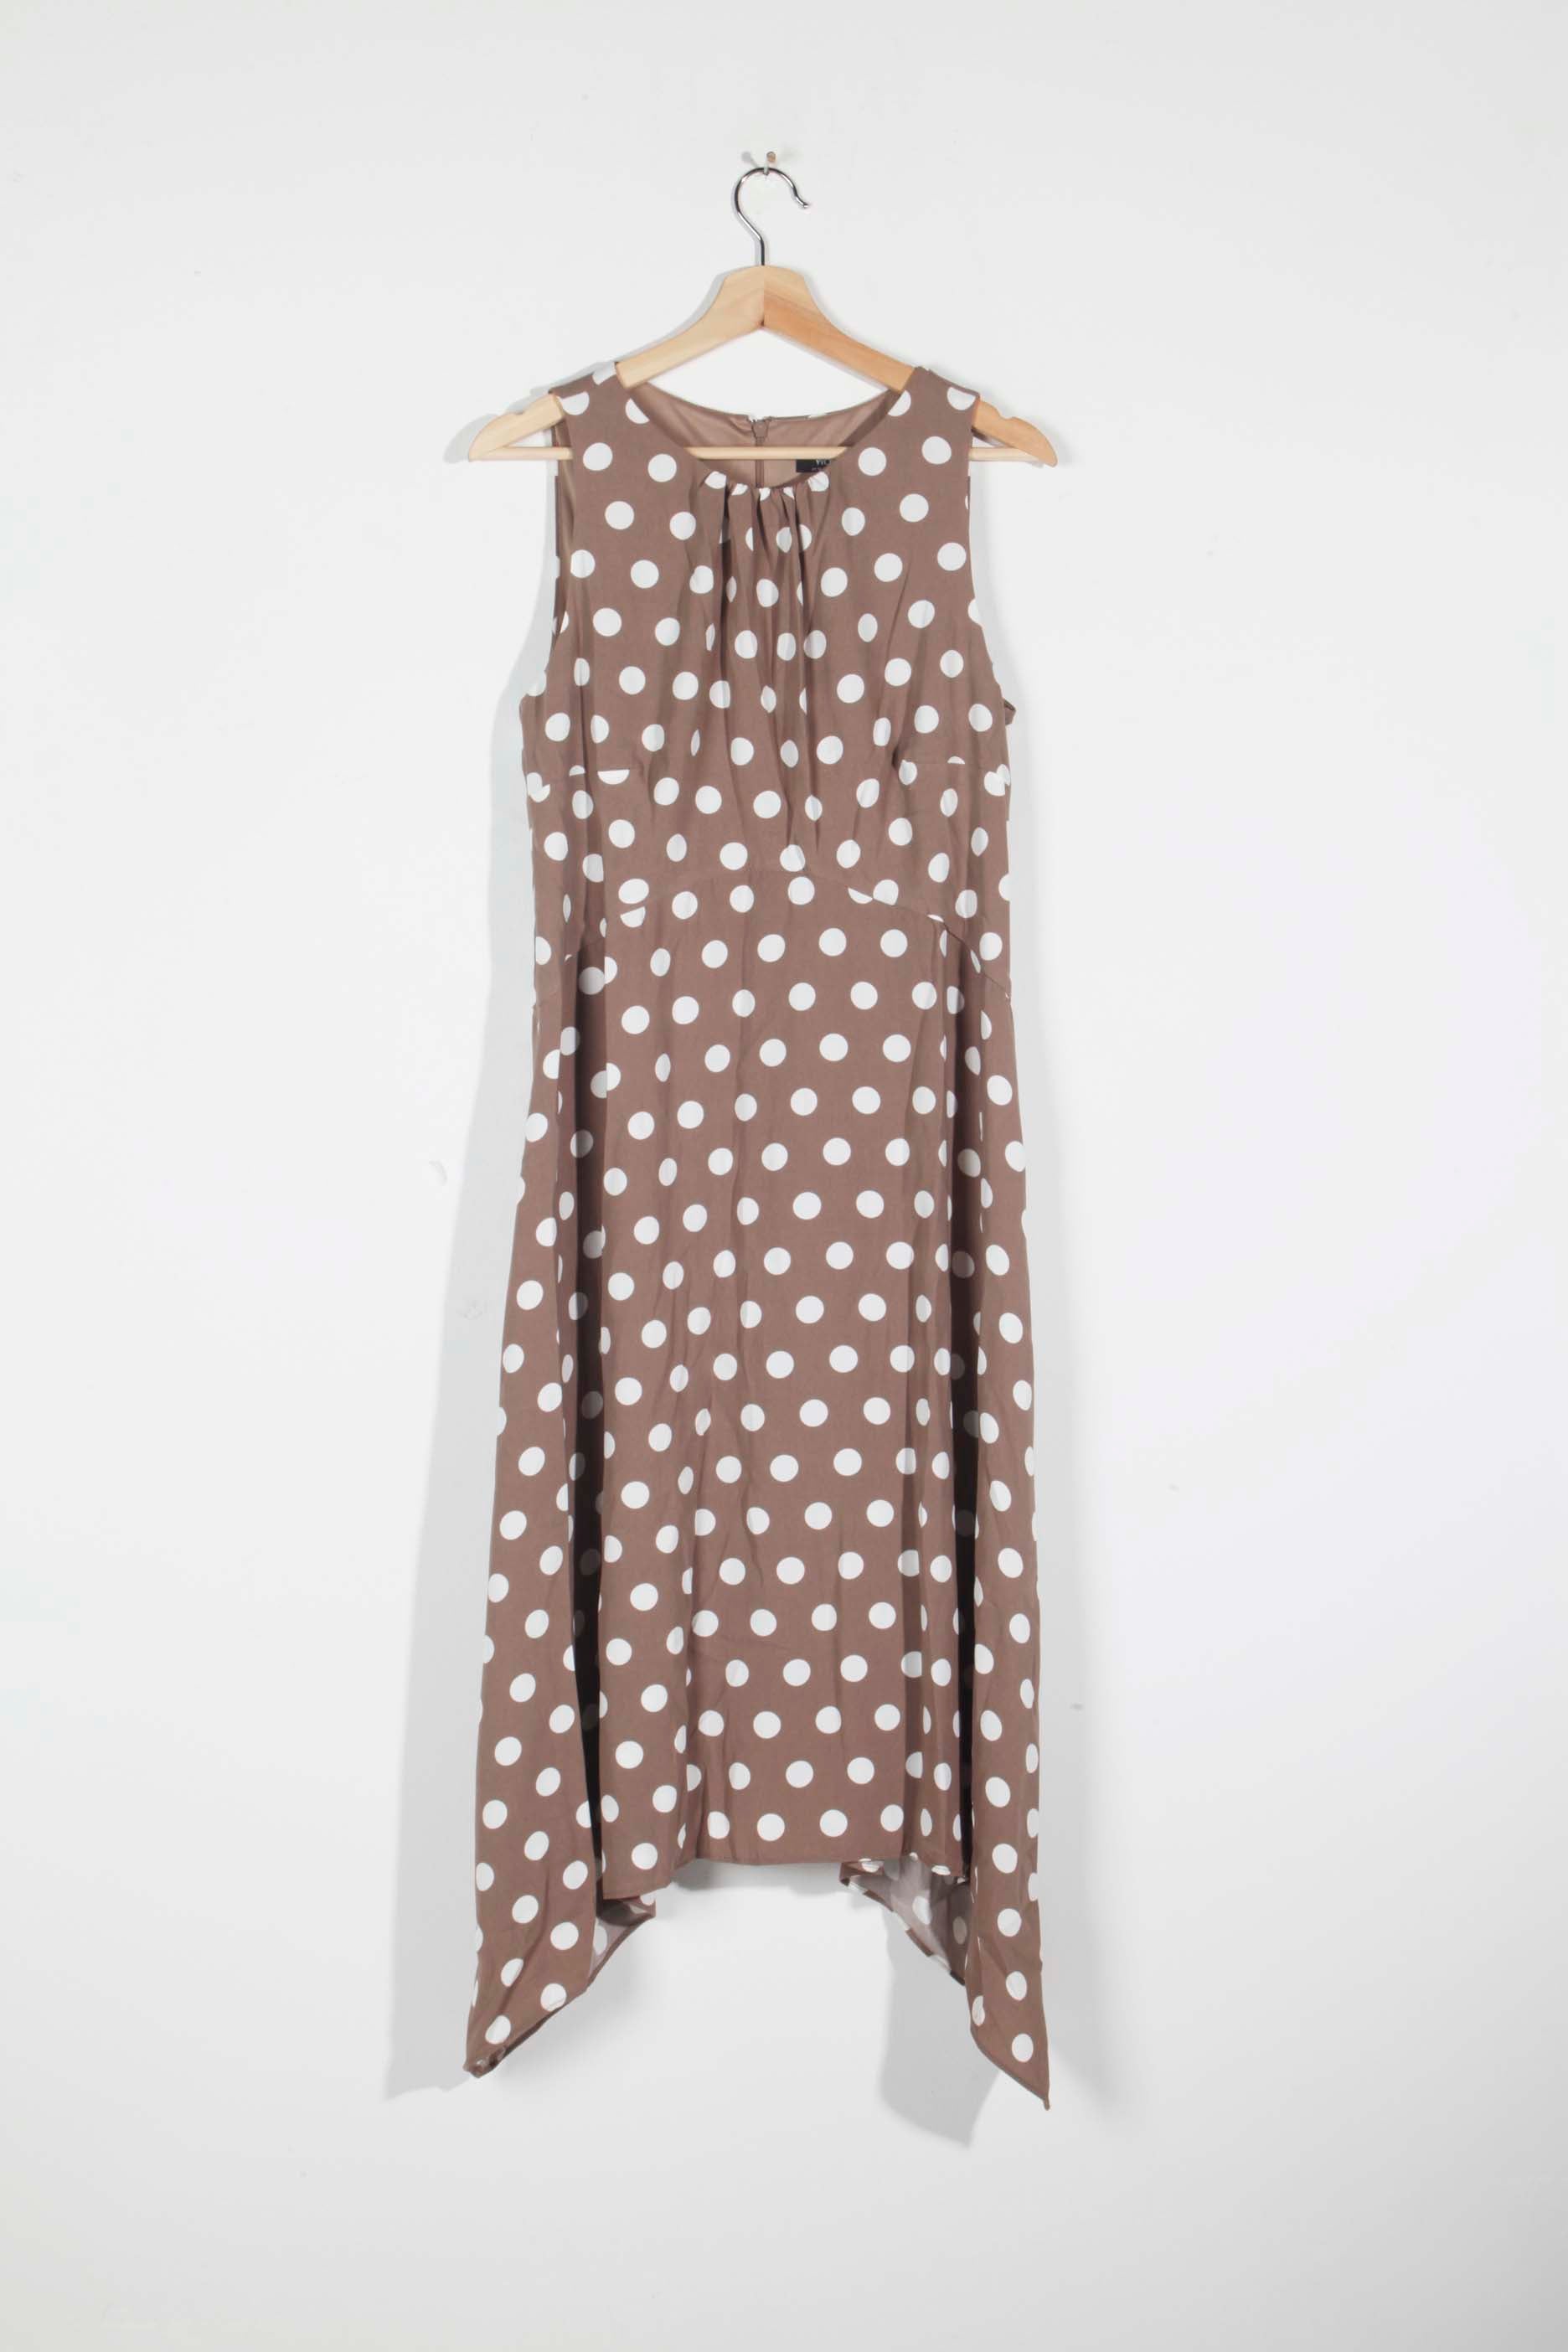 Brown and White Polka Dot Dress (Eu40)